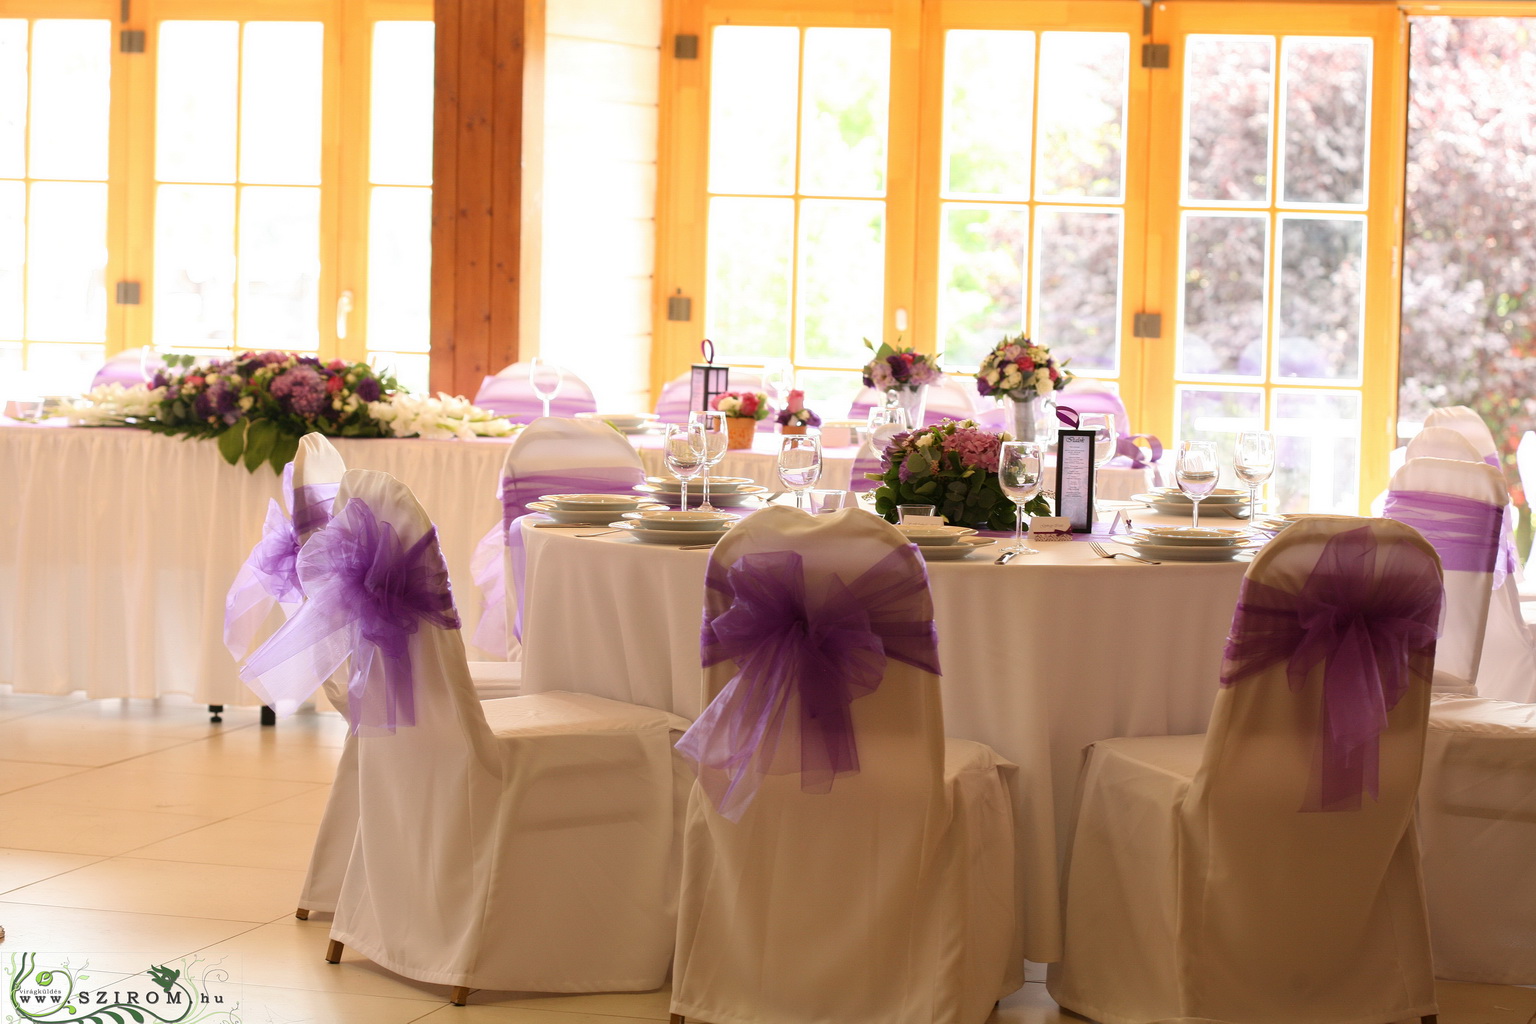 flower delivery Budapest - Purple flower decor,1 main and 1 guest centerpiece price, Petneházy Club, wedding